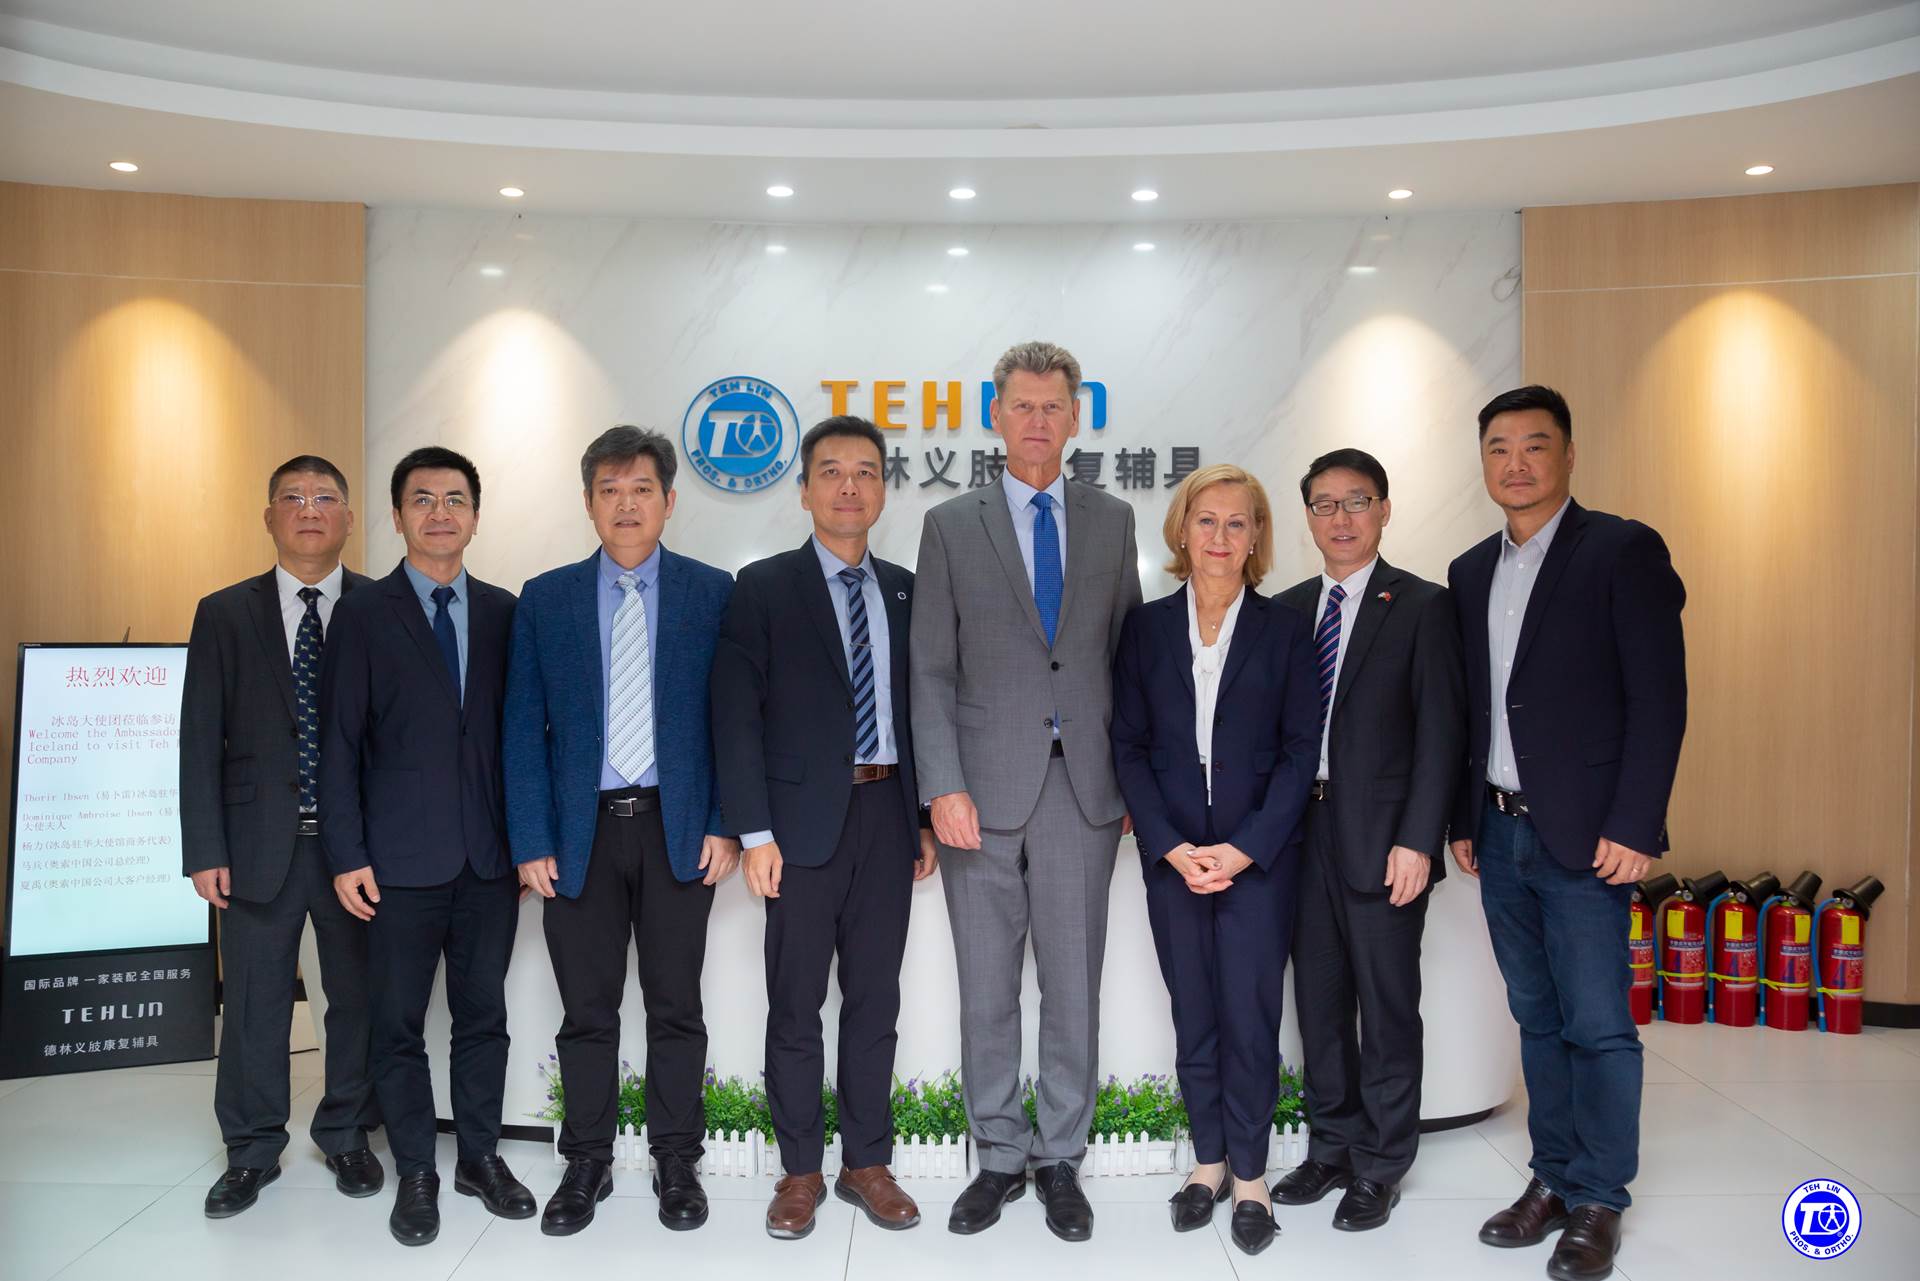 Ambassador Visited the Local Partner of OSSUR in Shenzhen - mynd